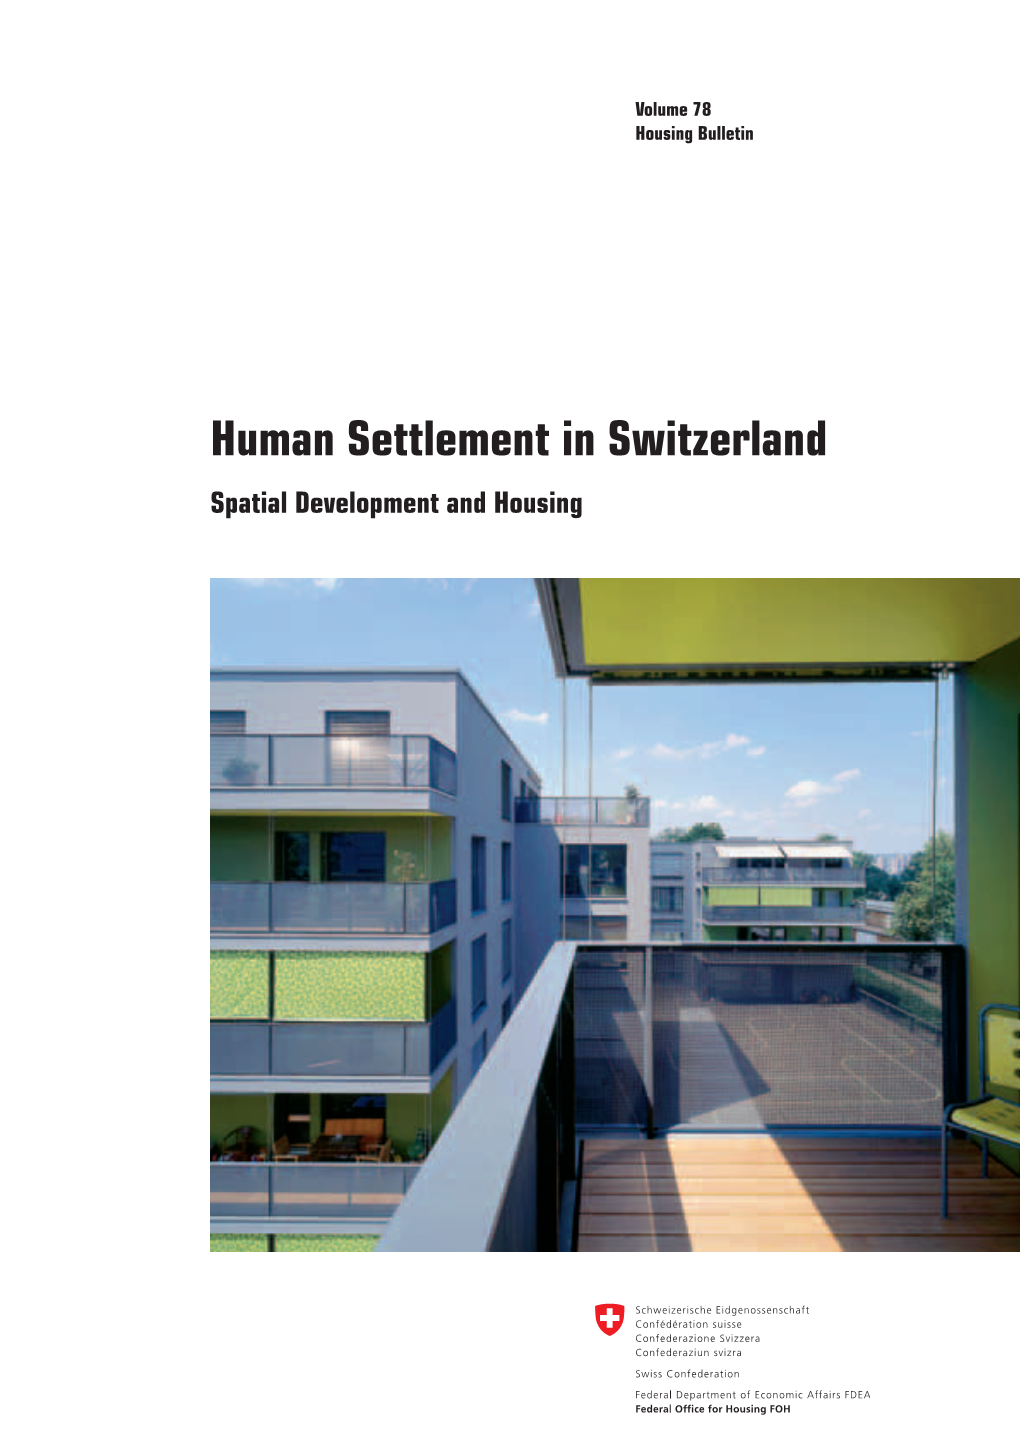 Human Settlement in Switzerland Spatial Development and Housing Volume 78 Housing Bulletin